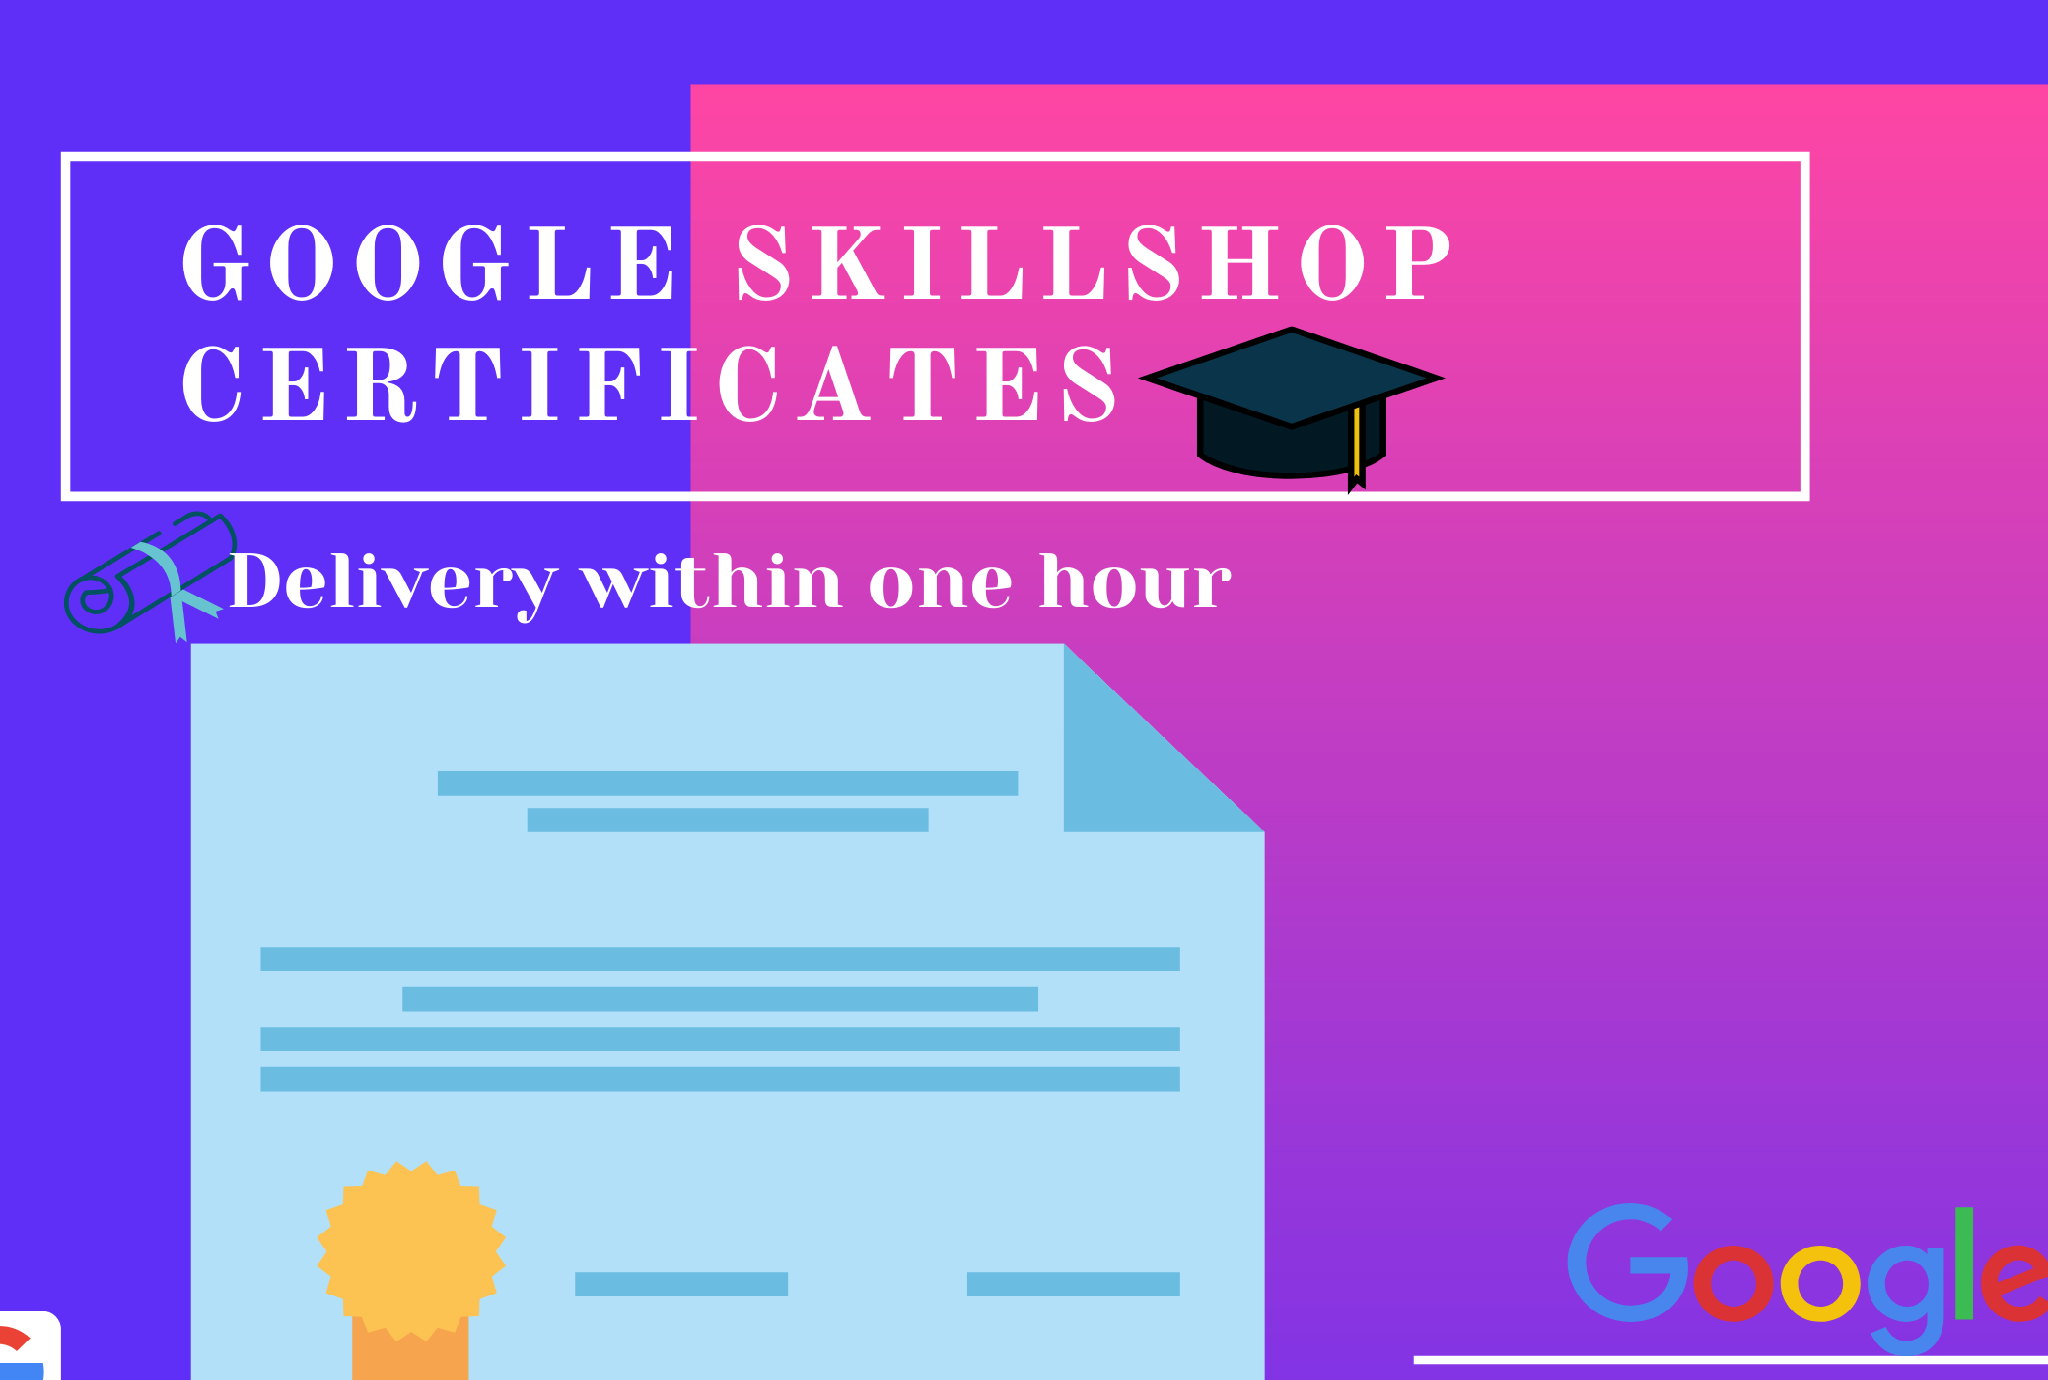 Google skillshop